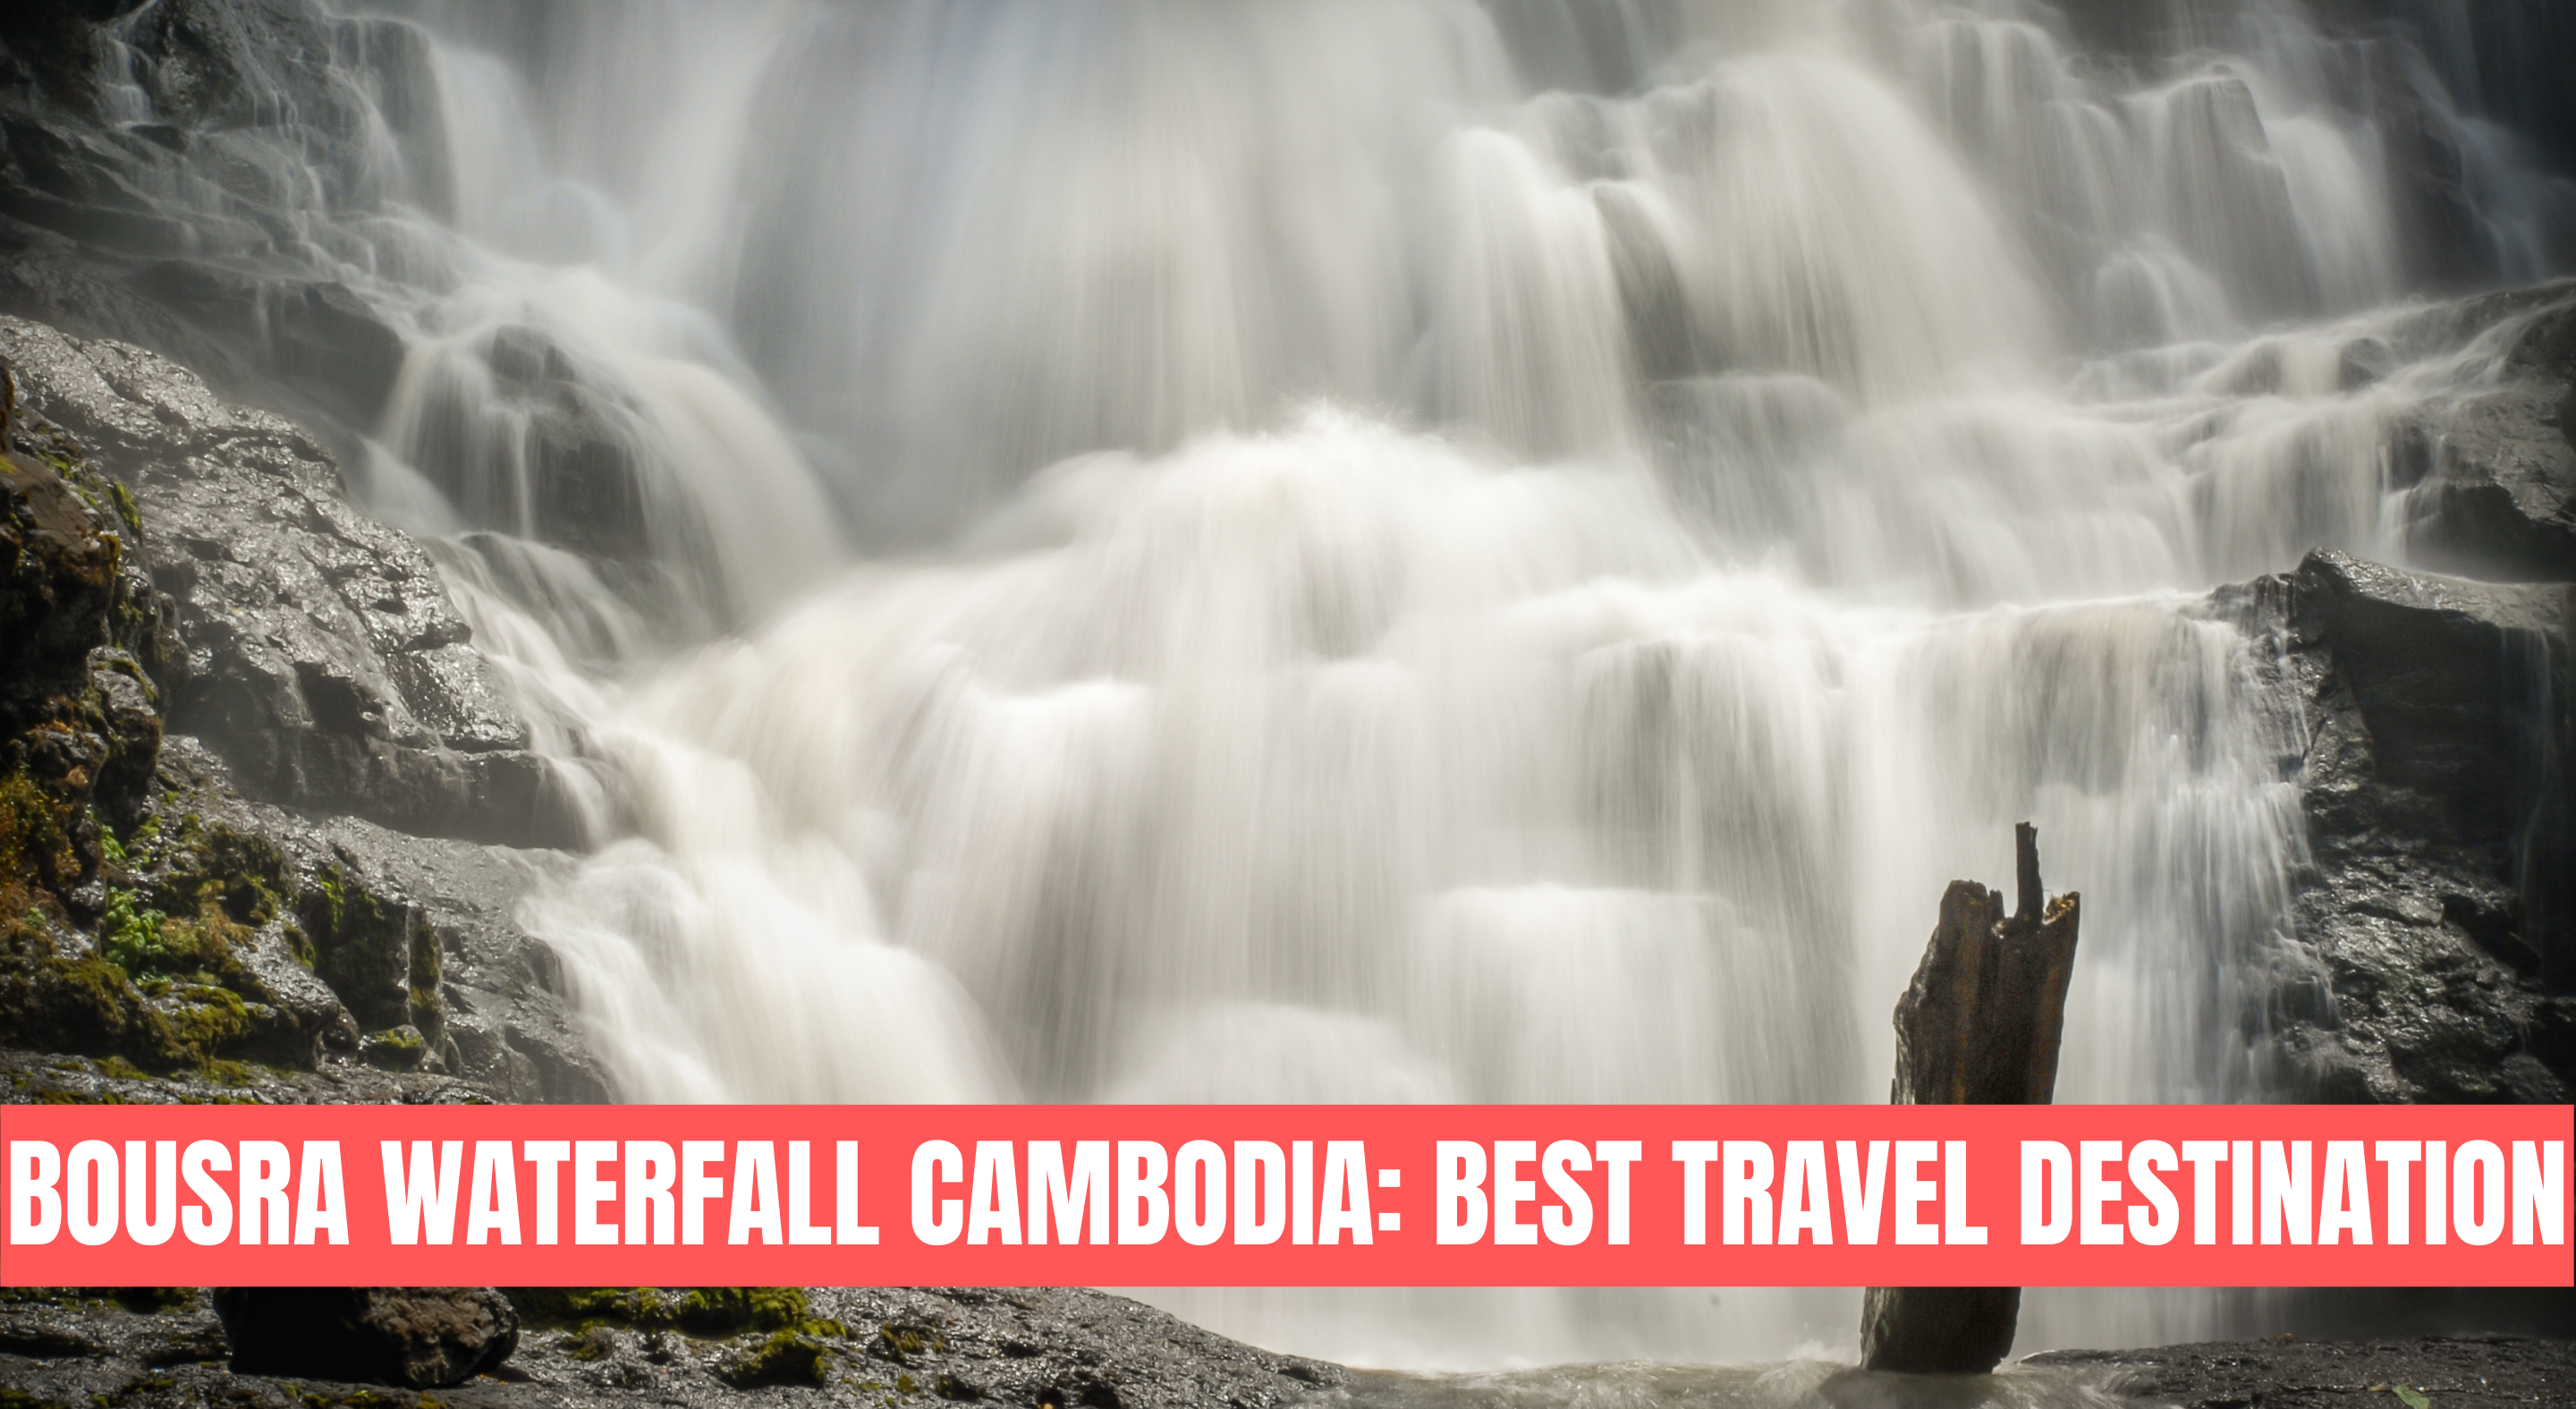 Bousra Waterfall Cambodia: Best Travel Destination